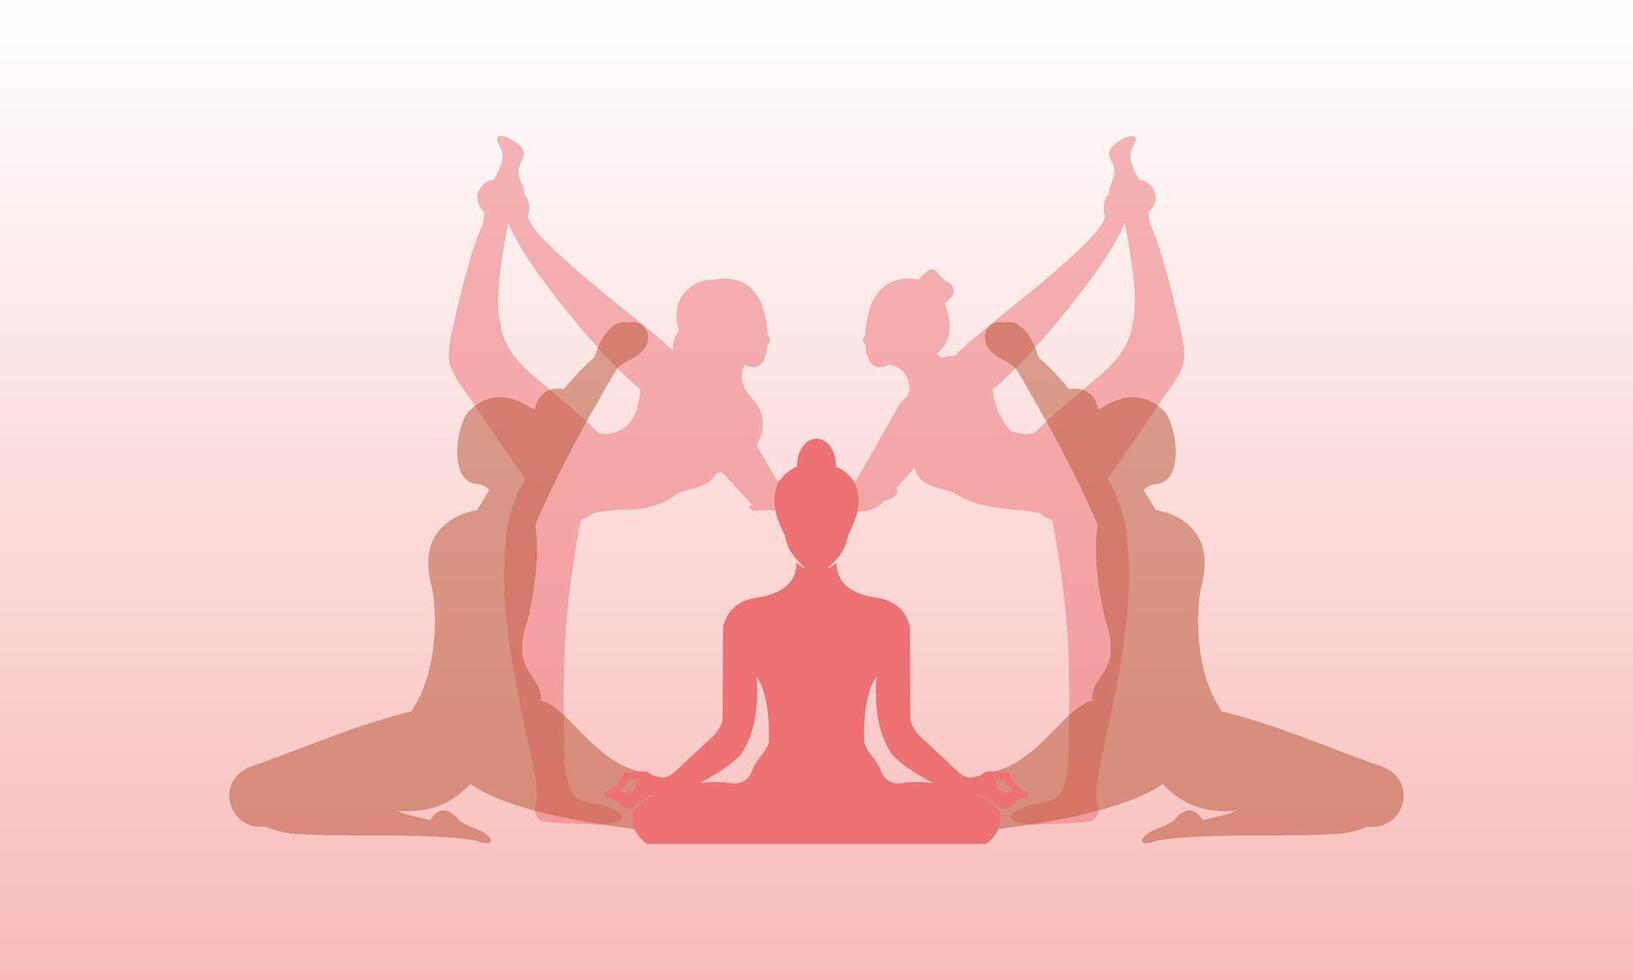 Yoga Day meditation parvastasna pose banner against pink lotus petals vector